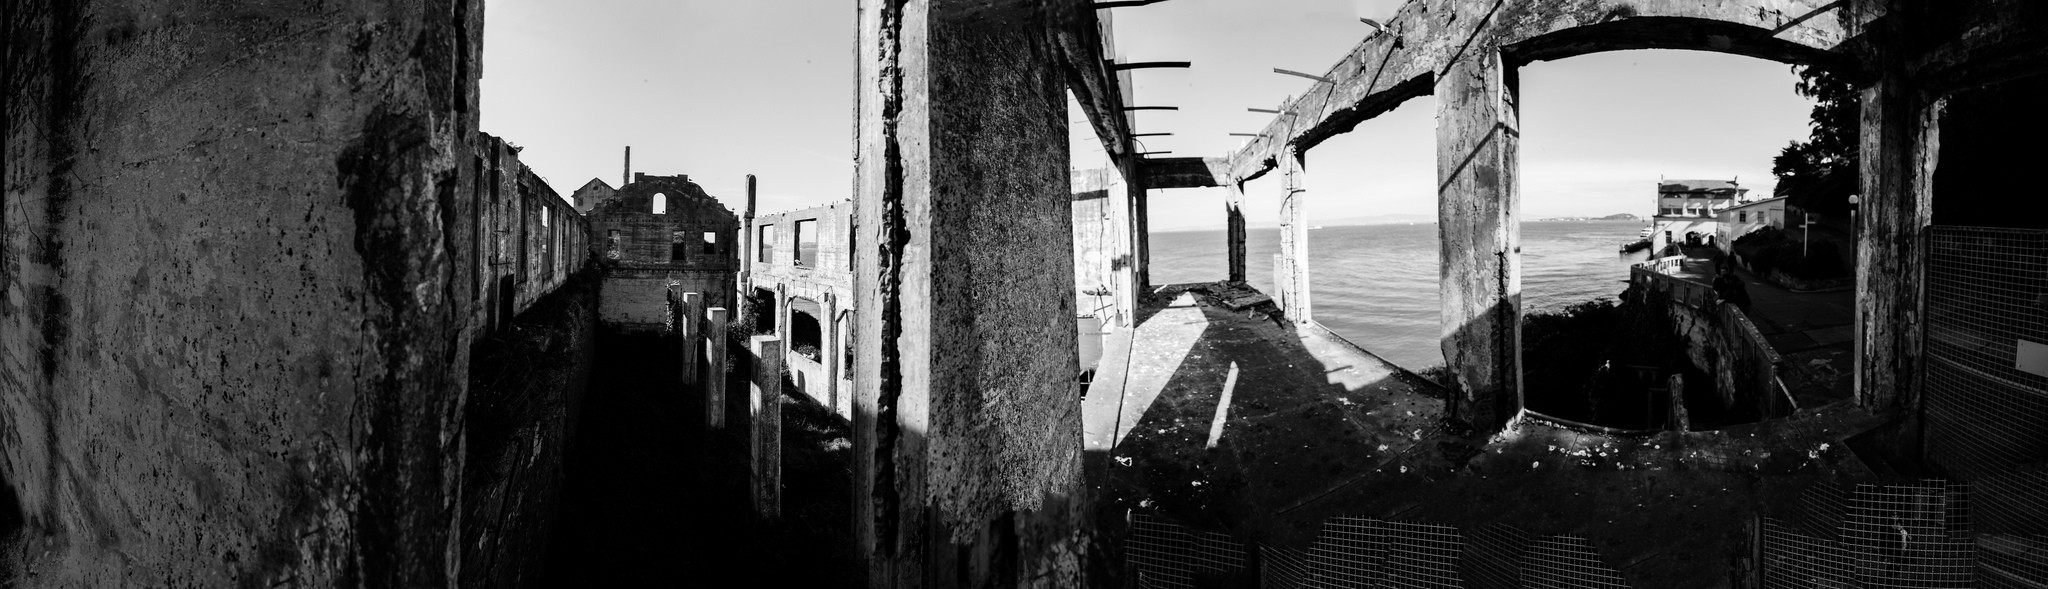 alcatraz-by-eschipul2